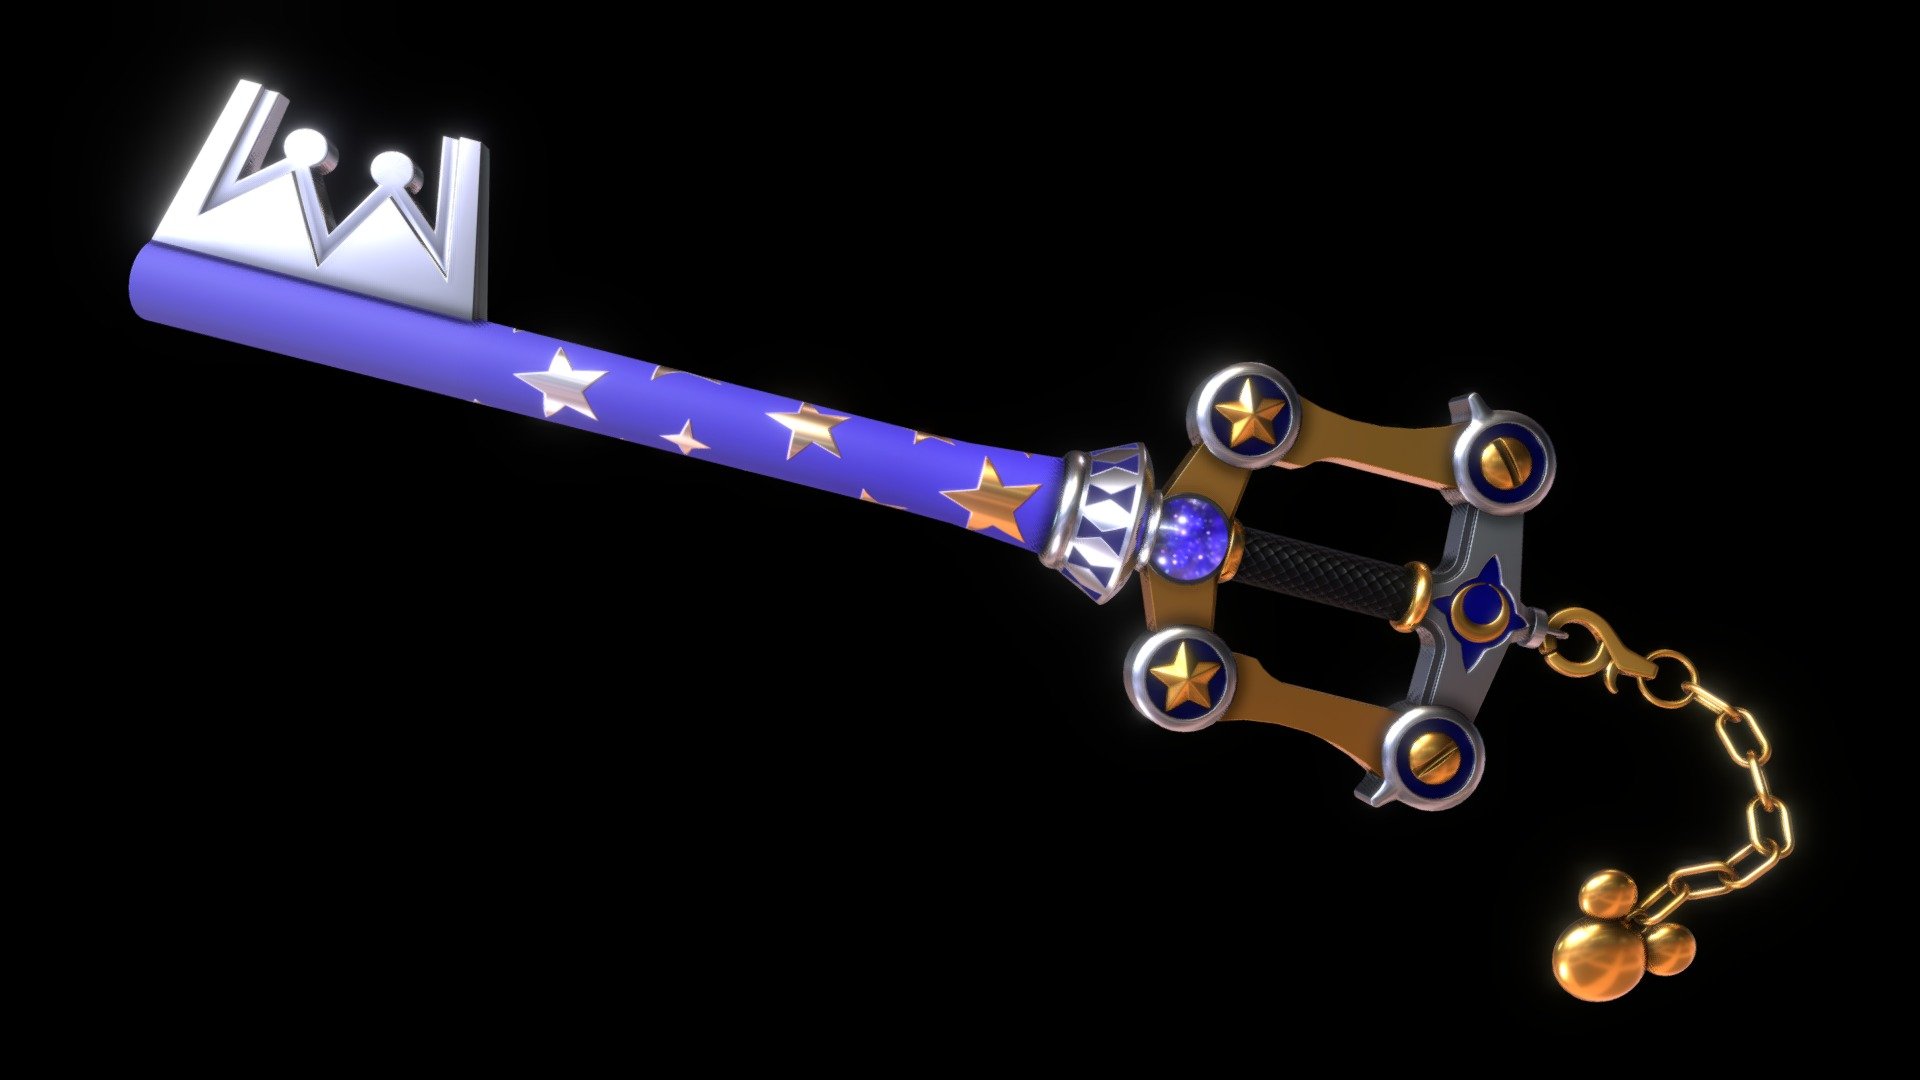 Star Cluster - Kingdom Hearts III 3D Model. 